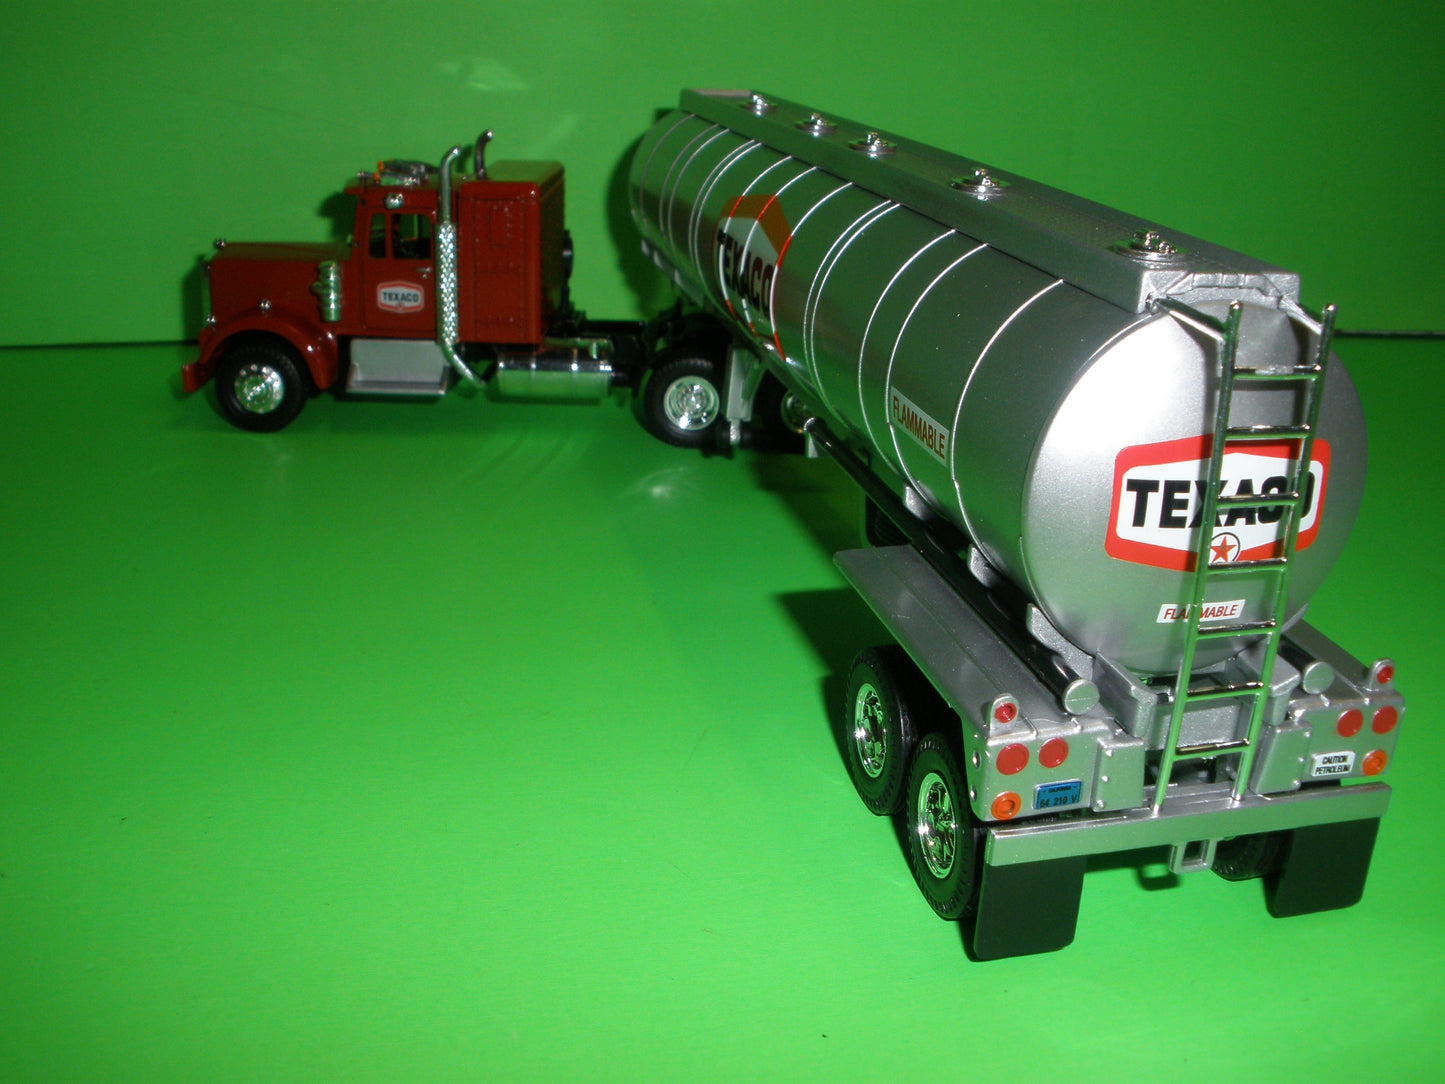 Texaco Kenworth W925 Semi Truck & Tanker Trailer